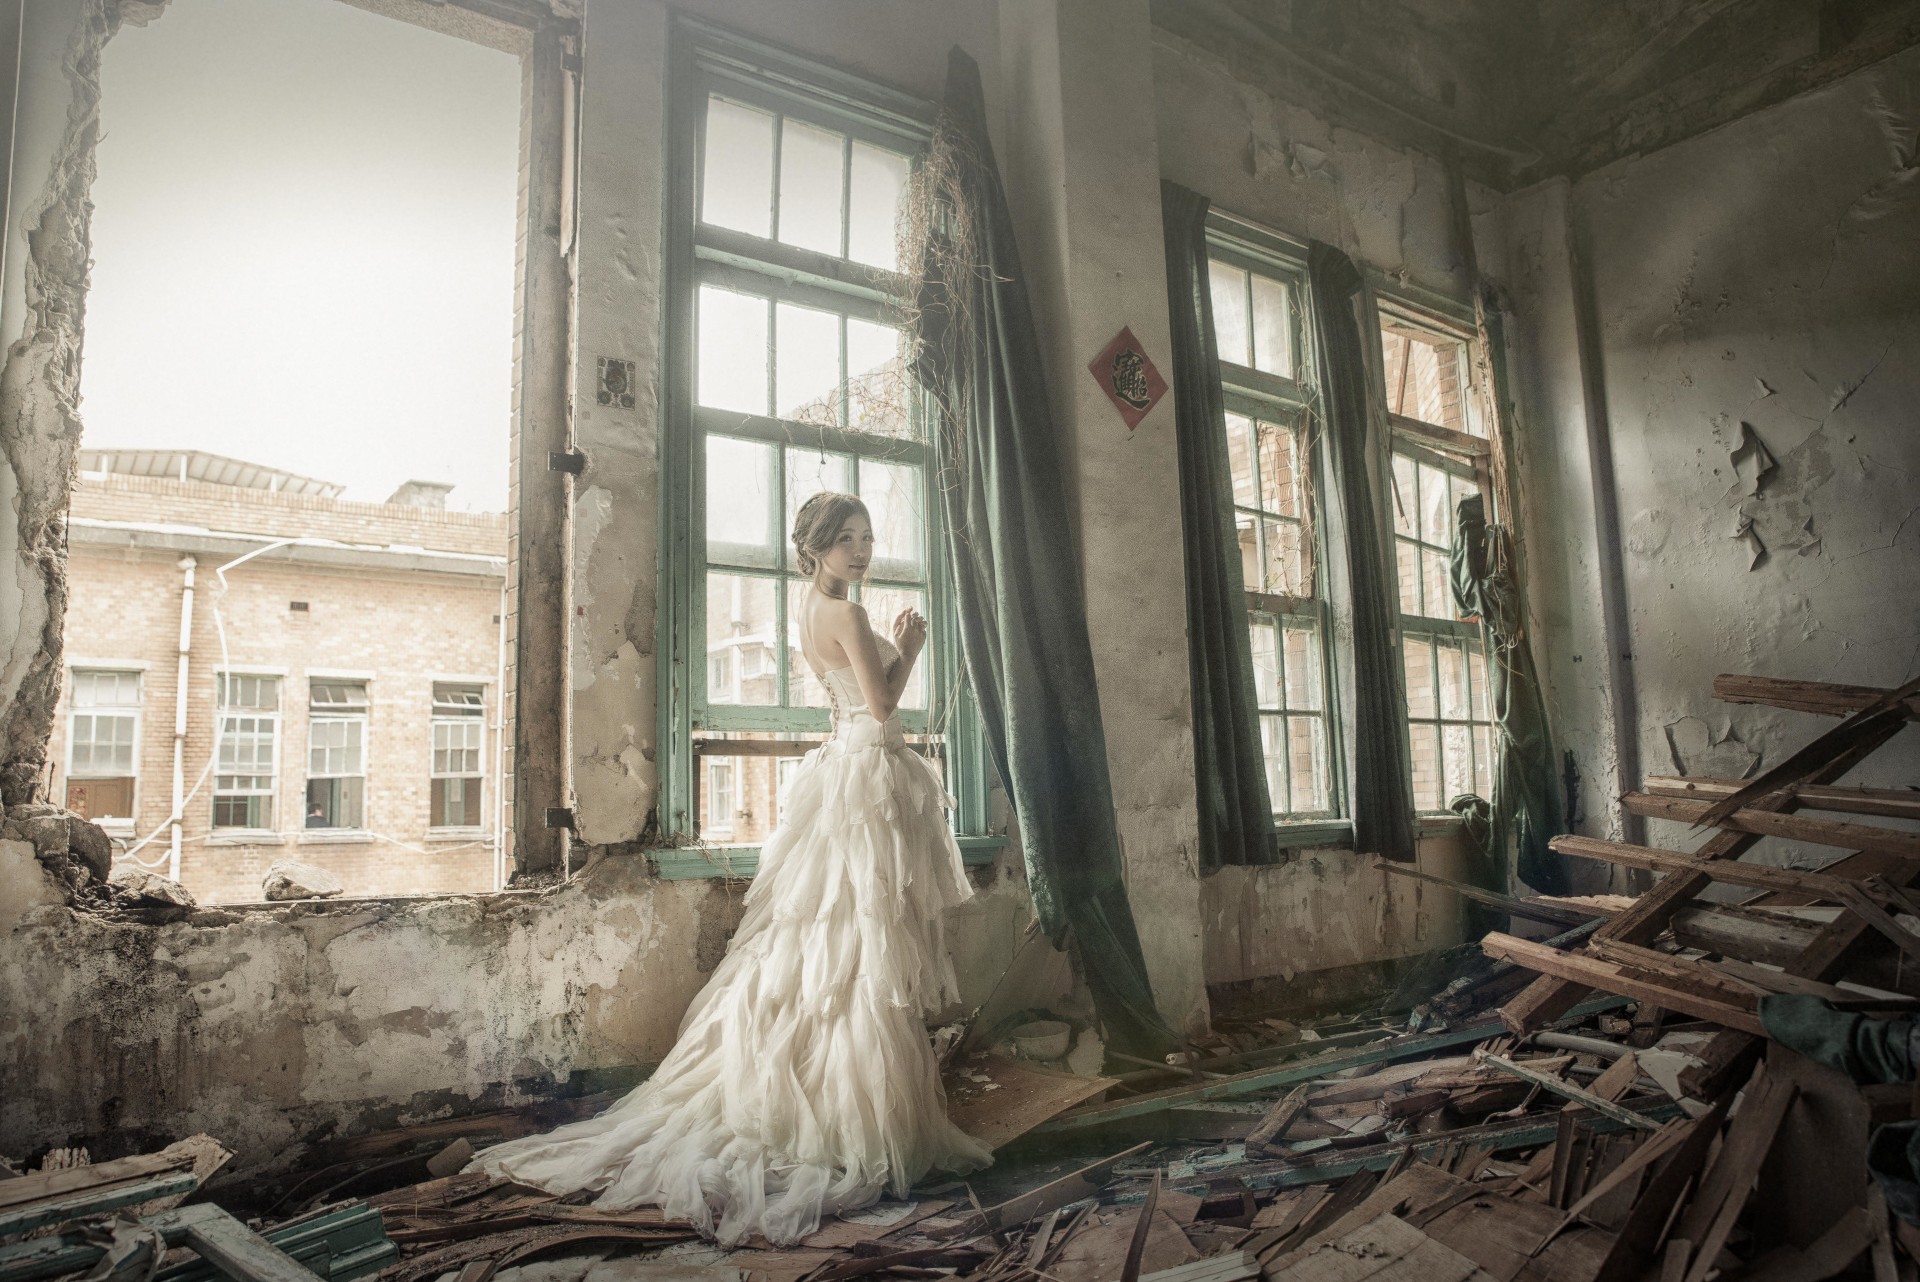 People 1920x1282 ruins Asian women model women indoors indoors dress white dress abandoned white clothing